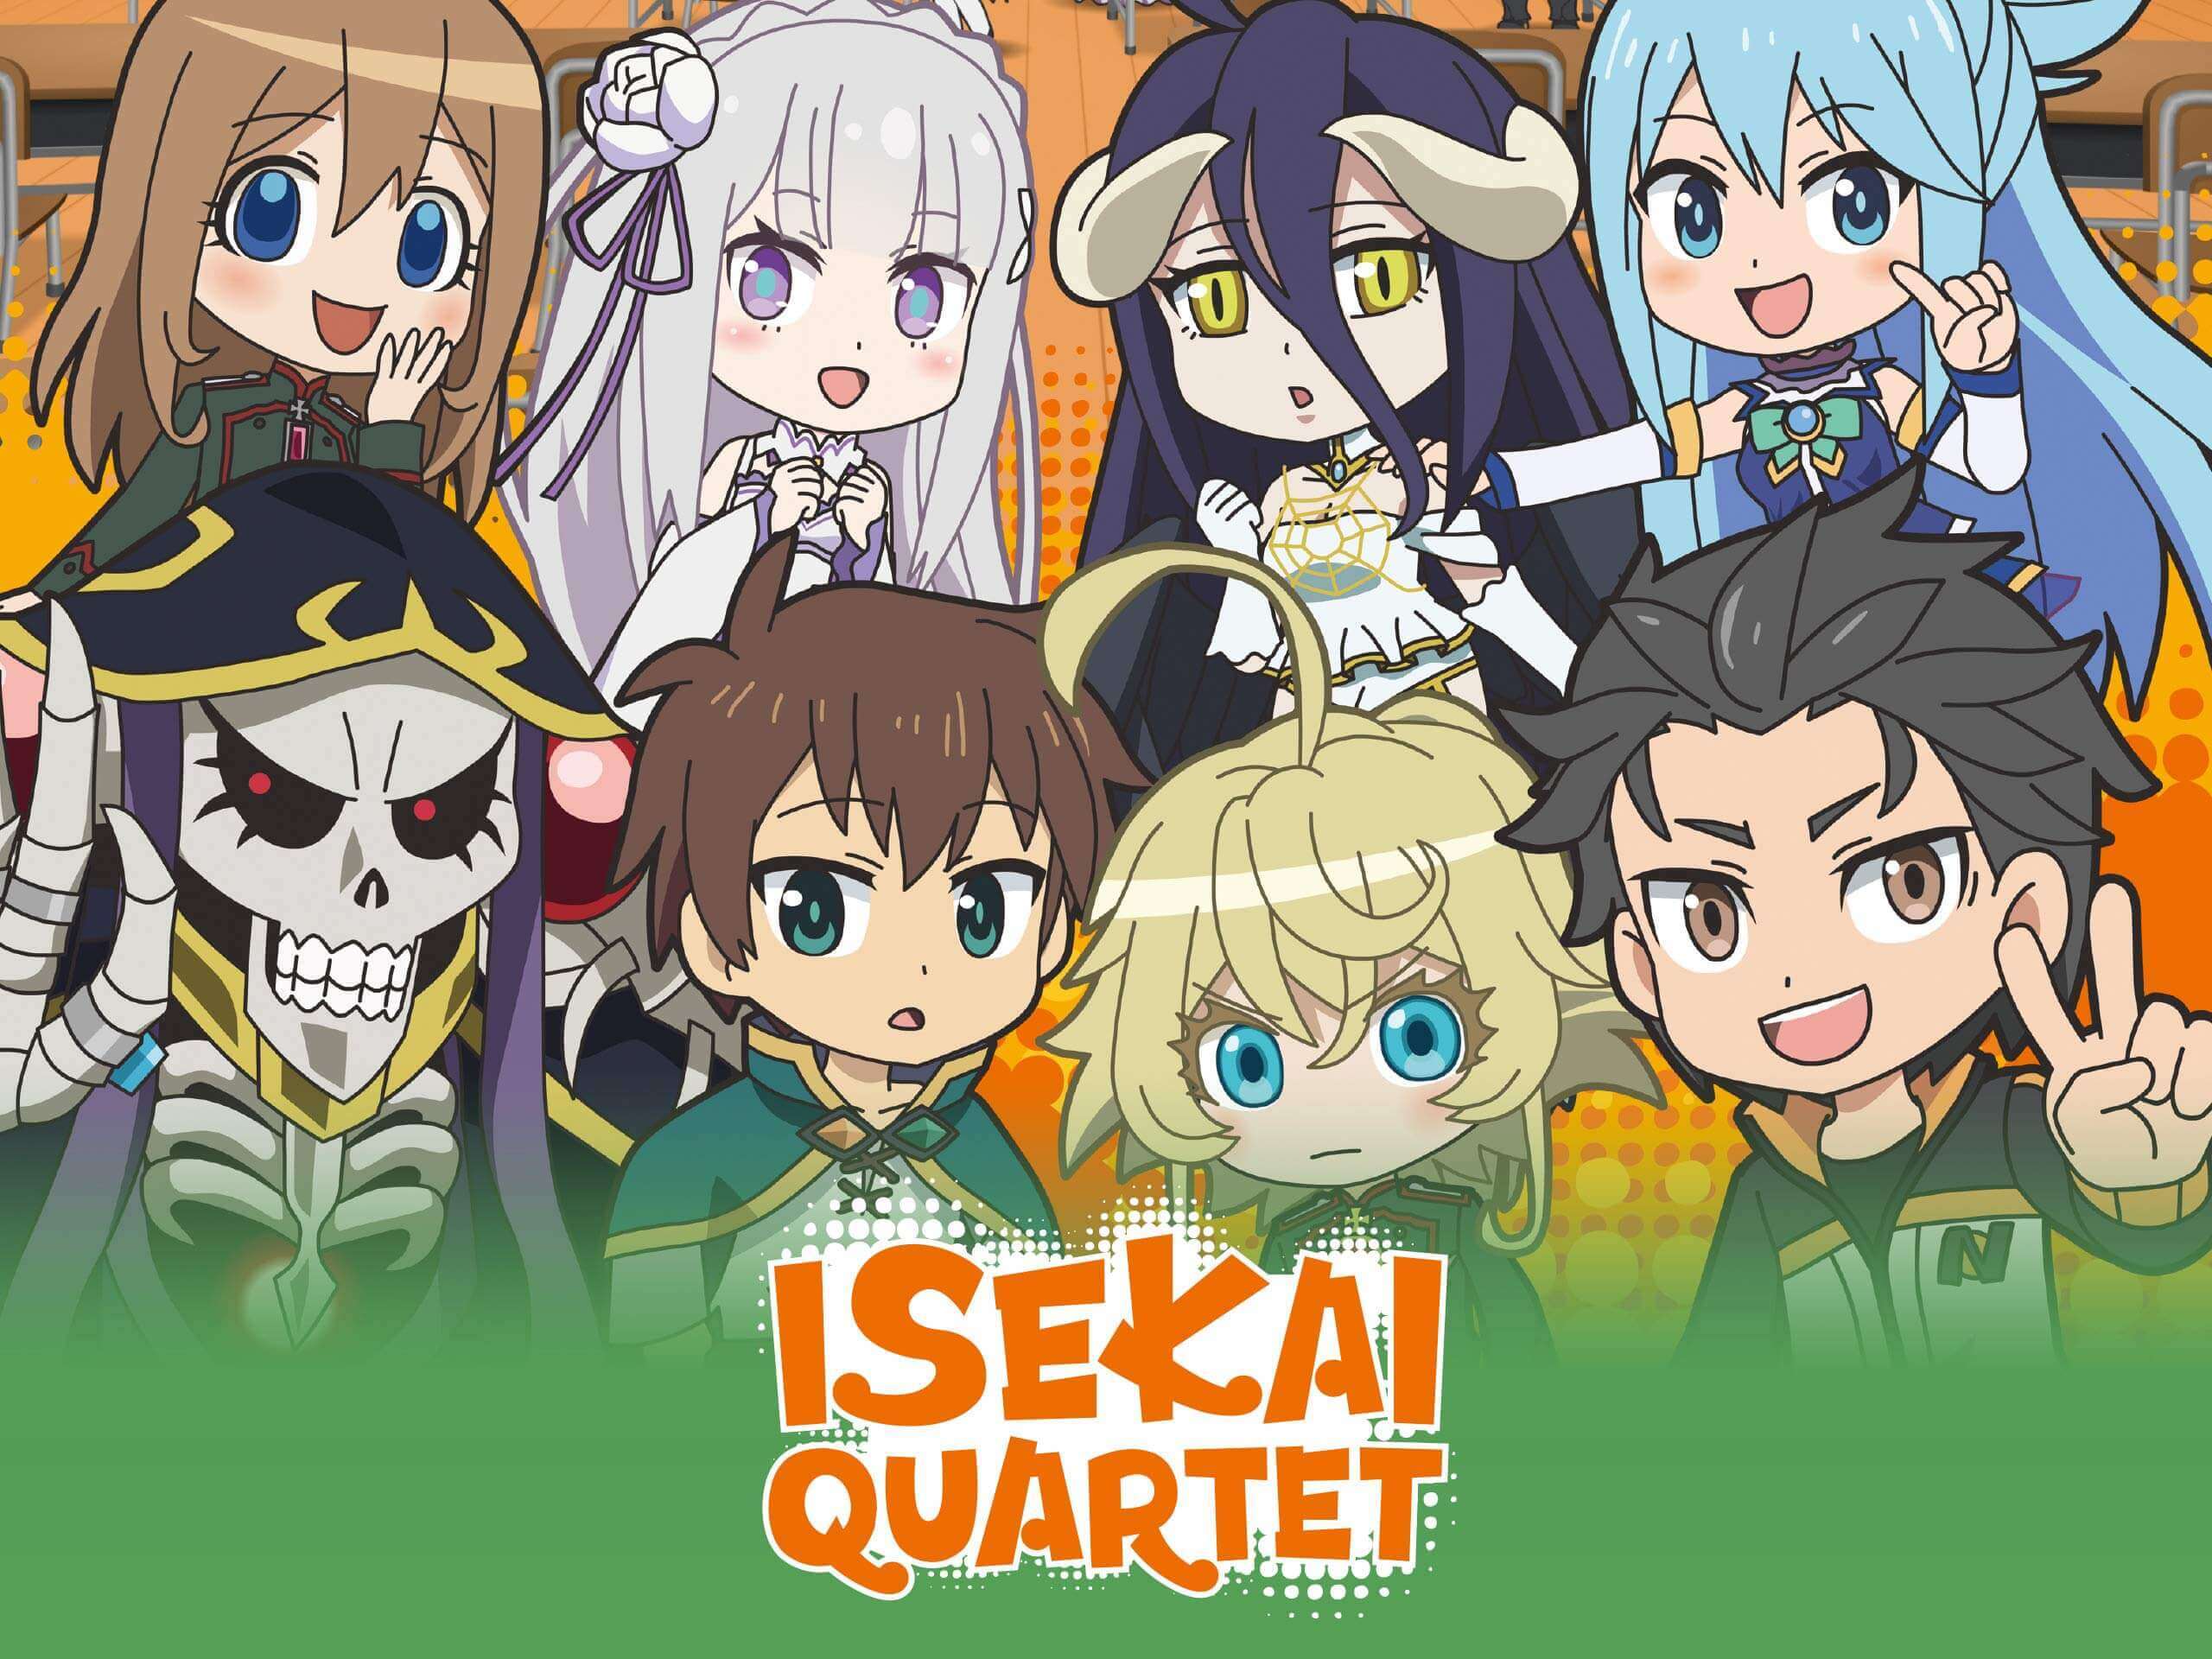 Review dan Sinopsis anime “Isekai Quartet”